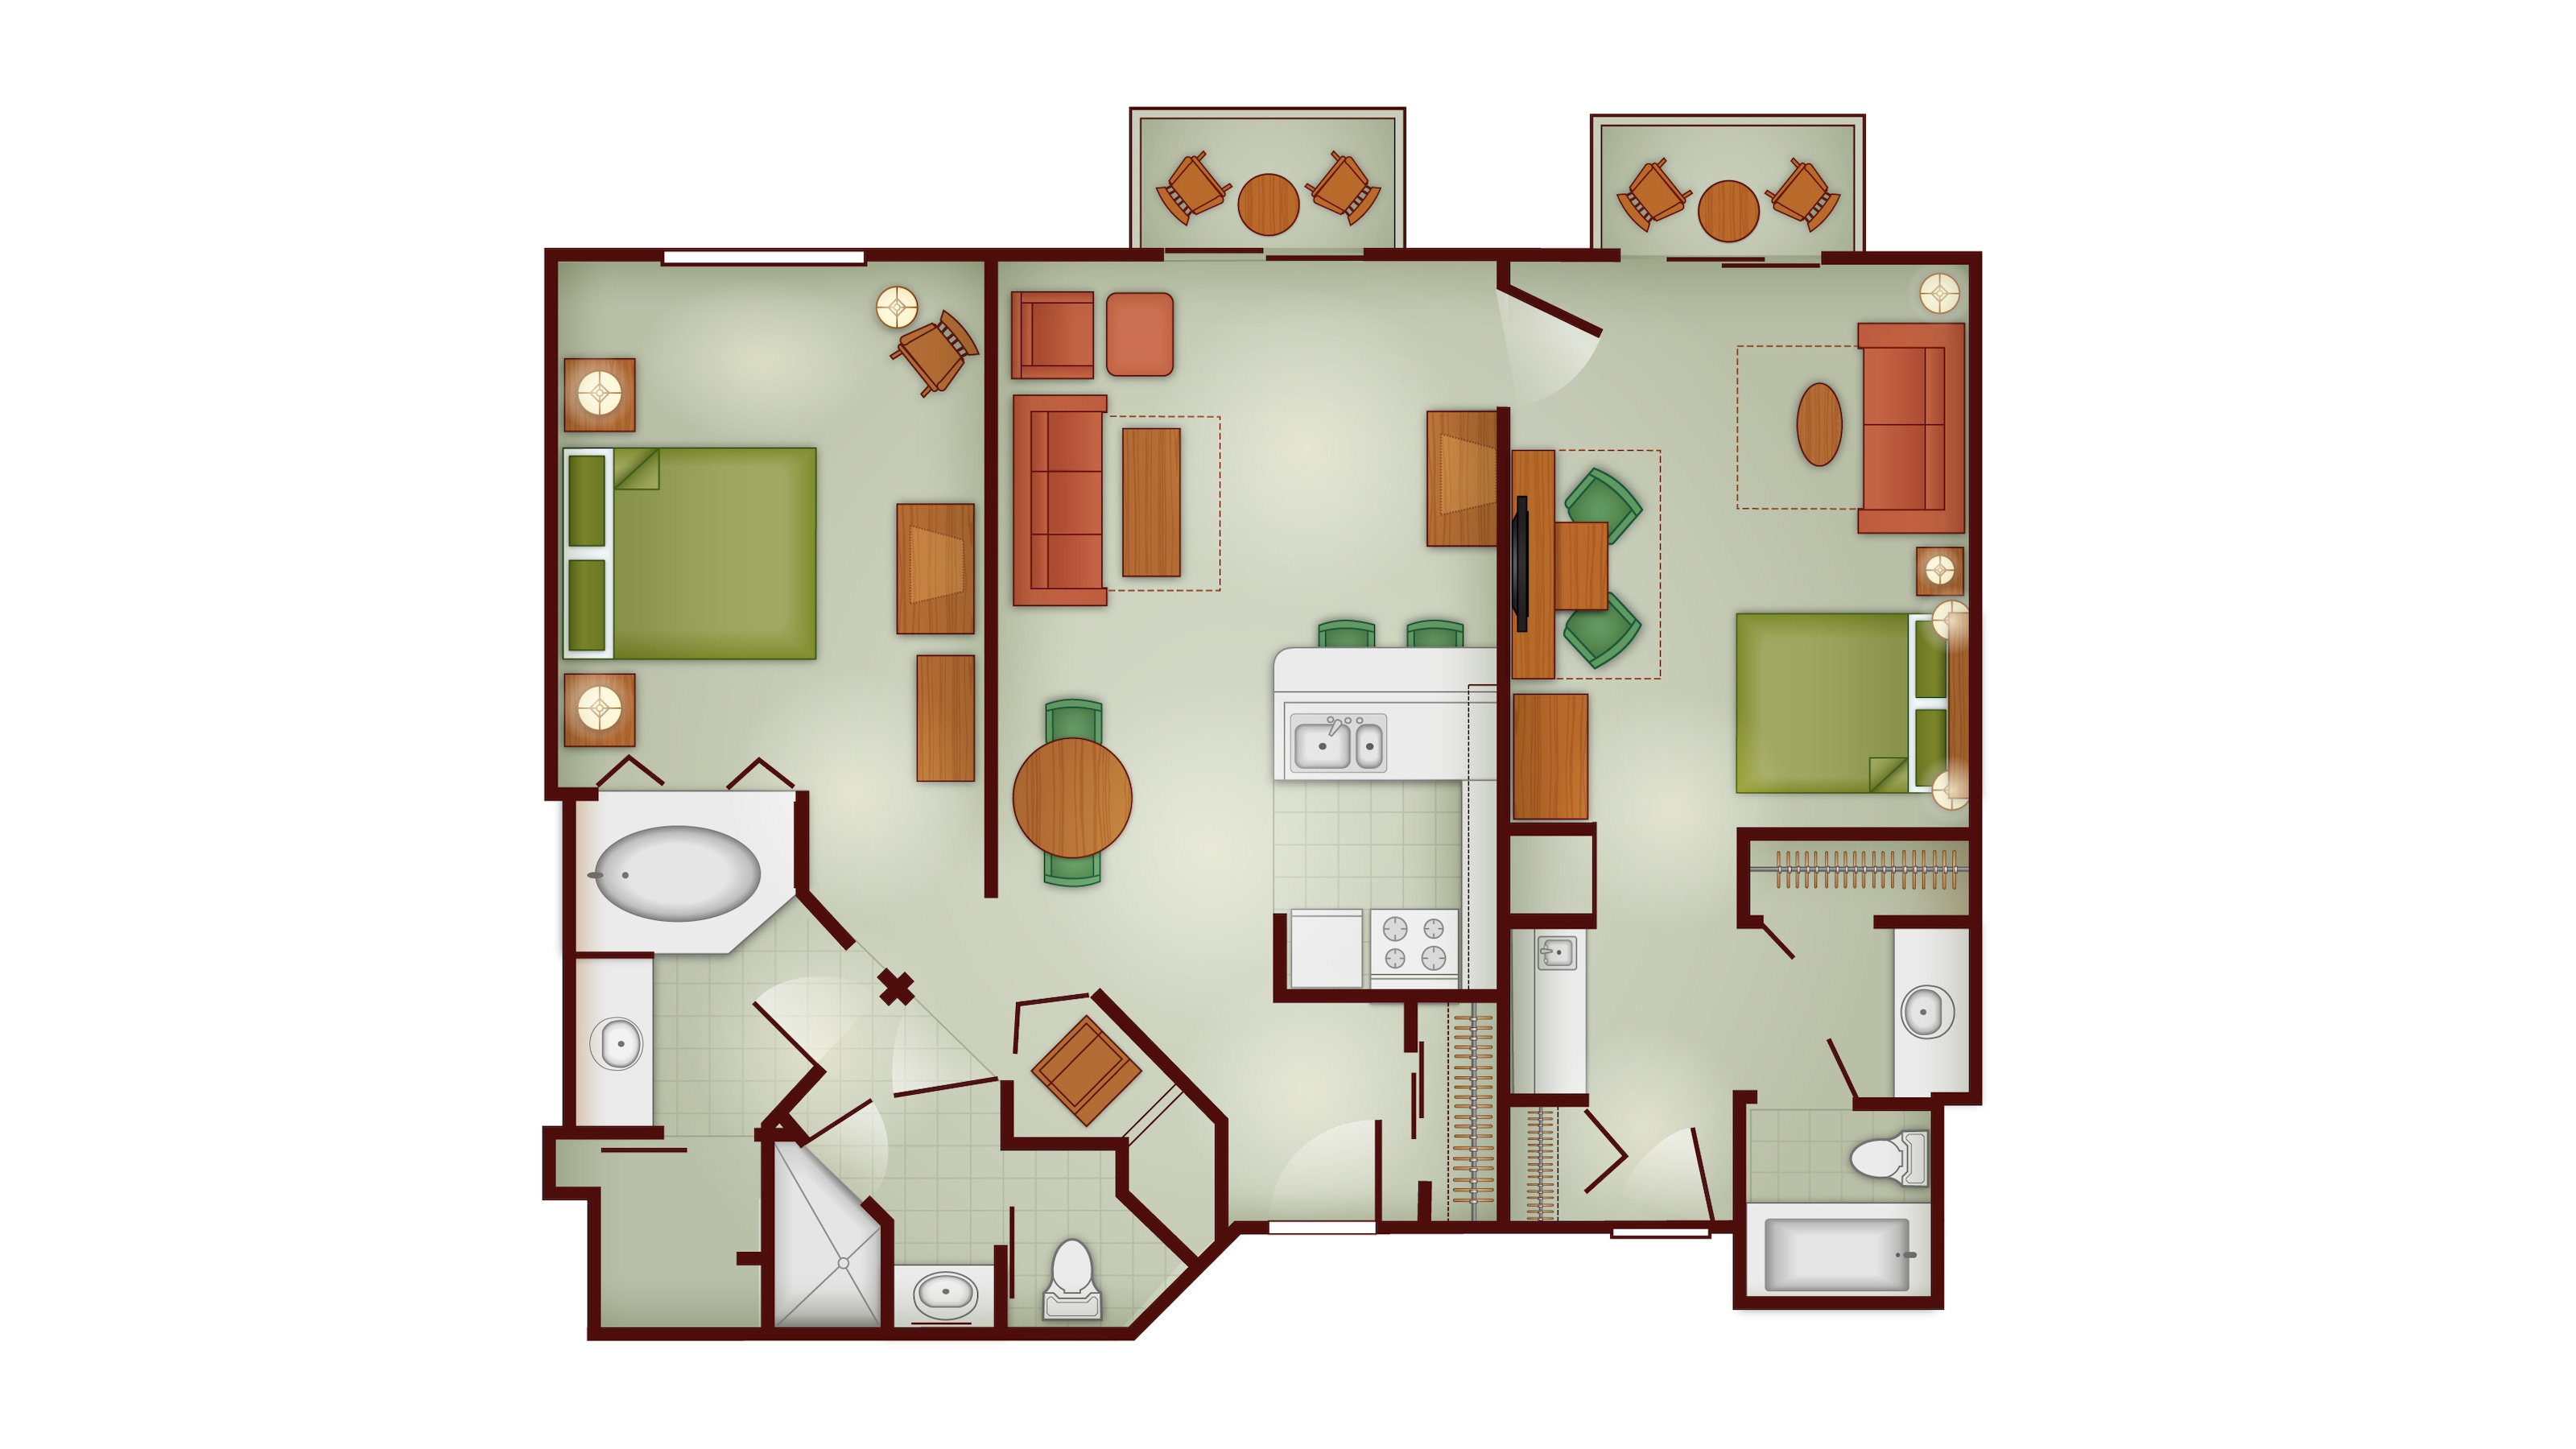 wl-floor-plans-clean-2-bedroom-16x9.jpg